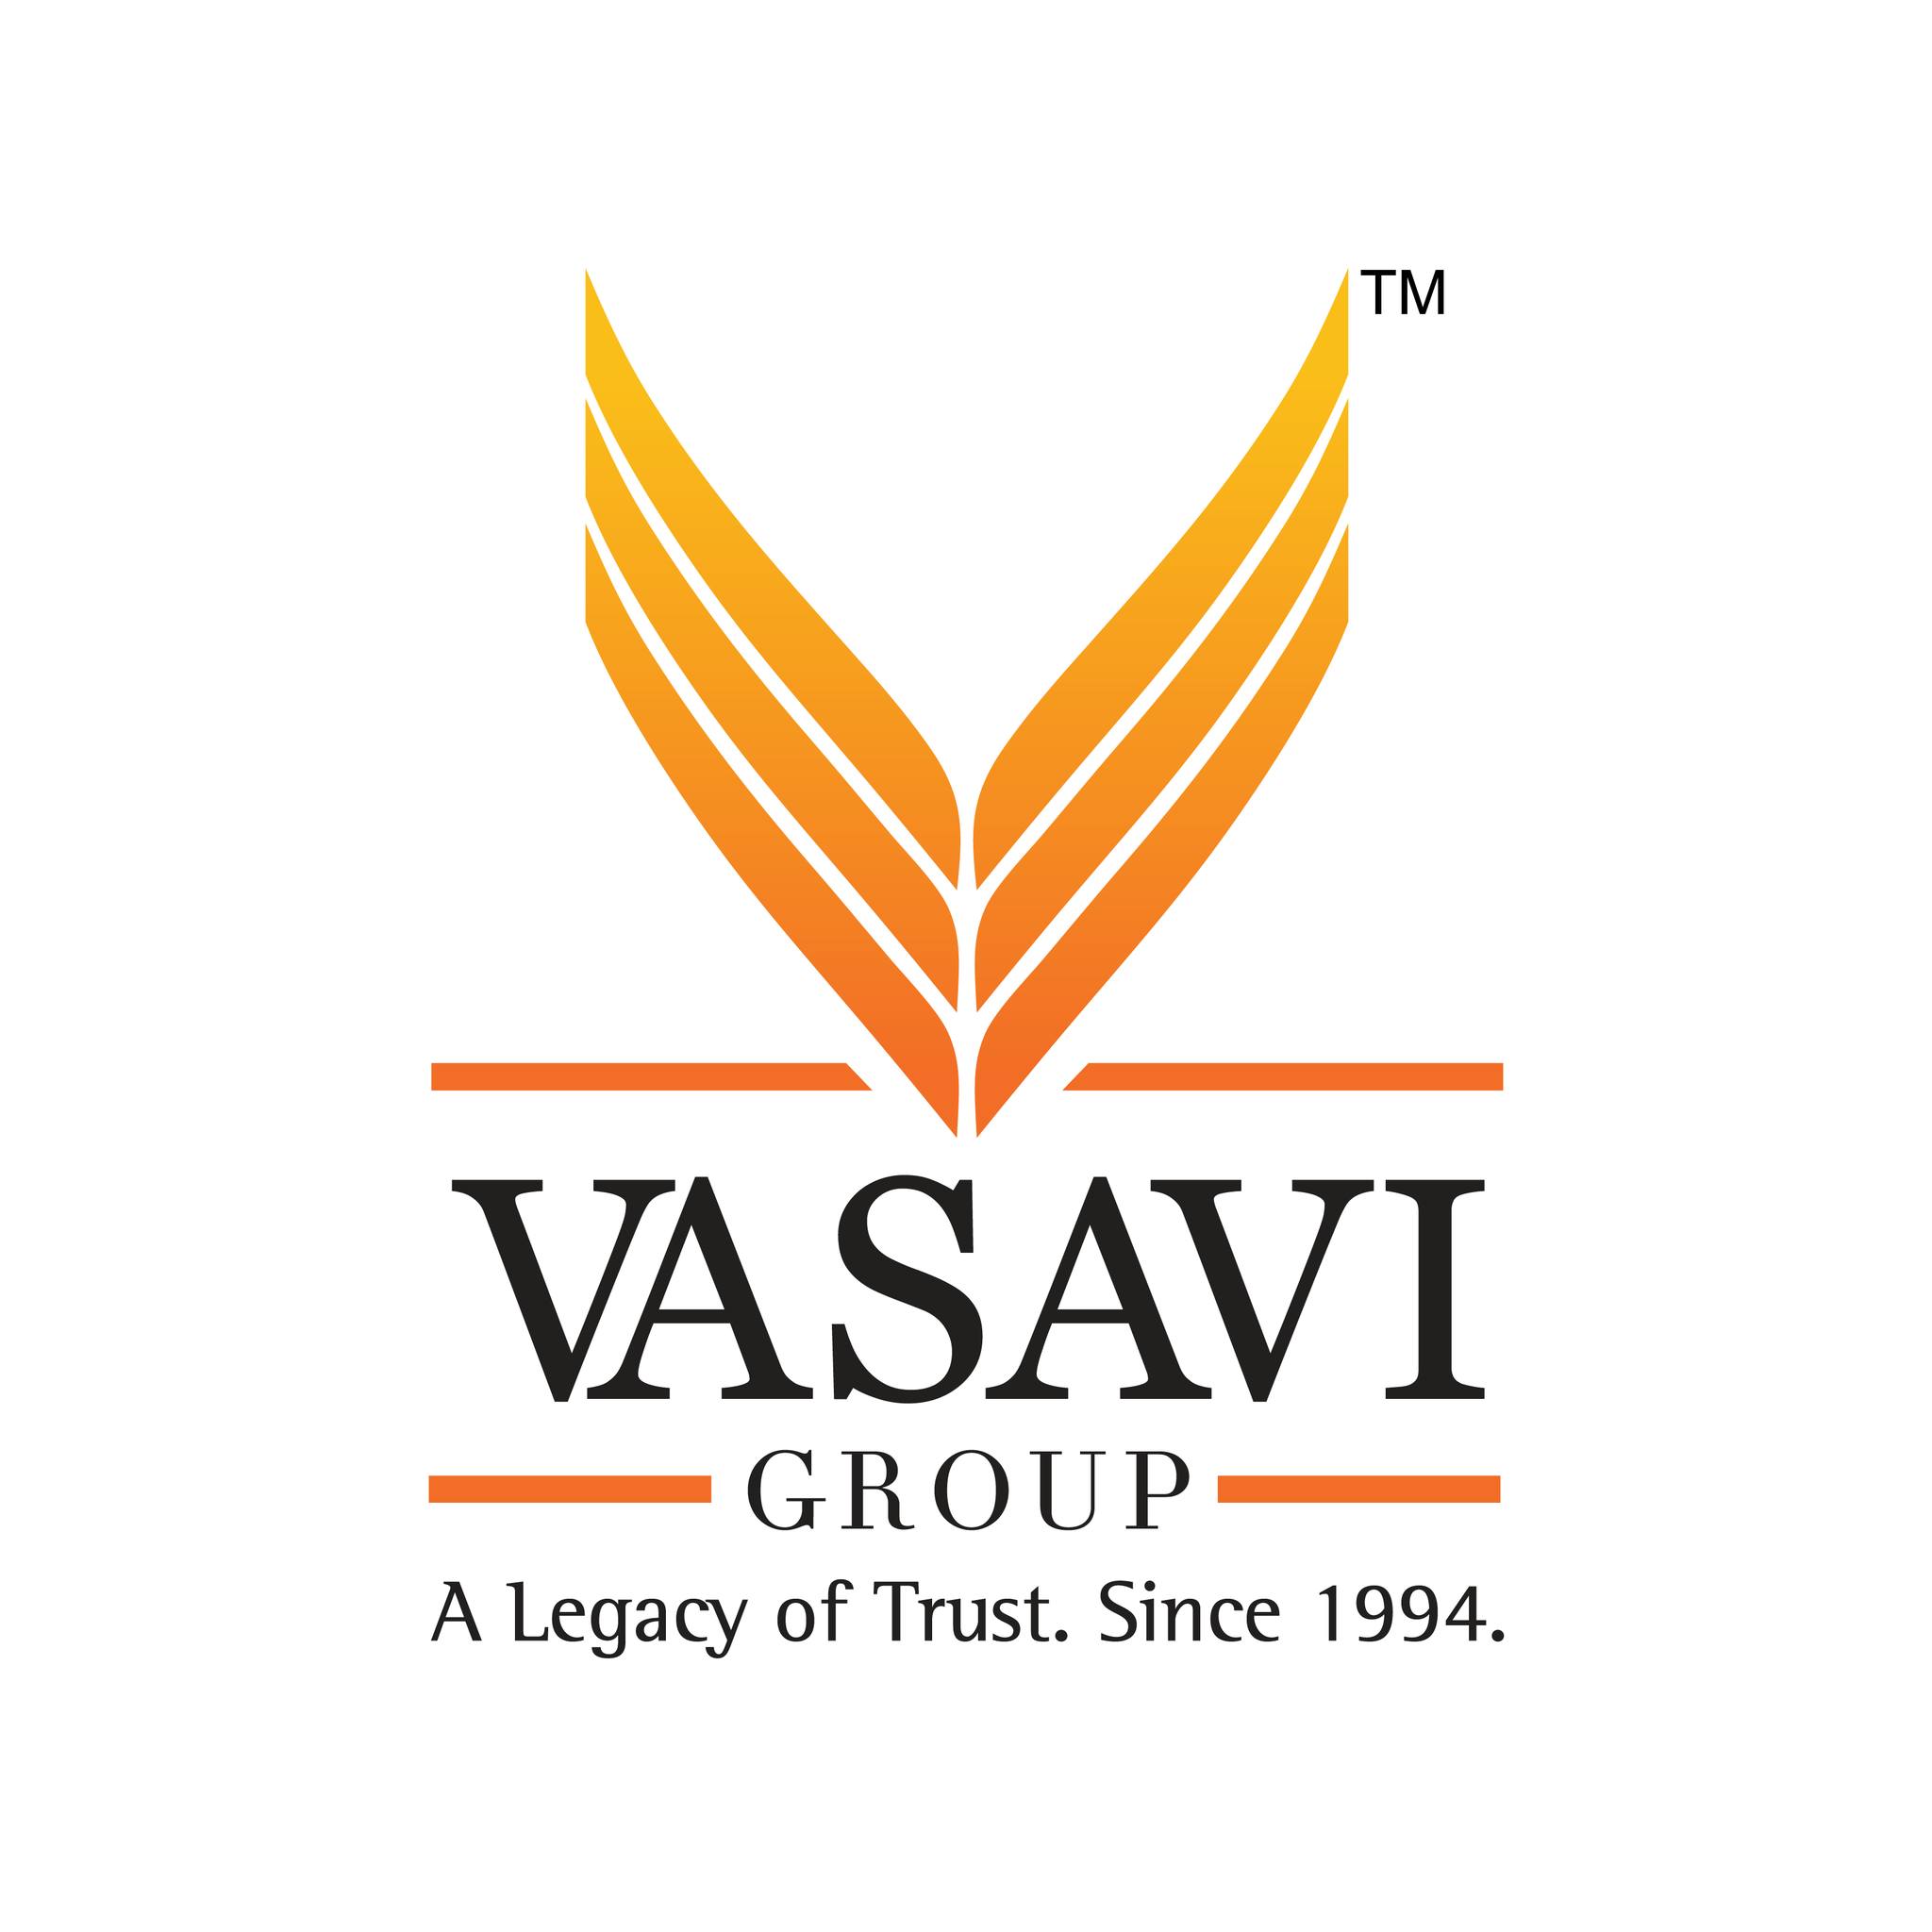 Villas for Sale in Hyderabad – Vasavi Group